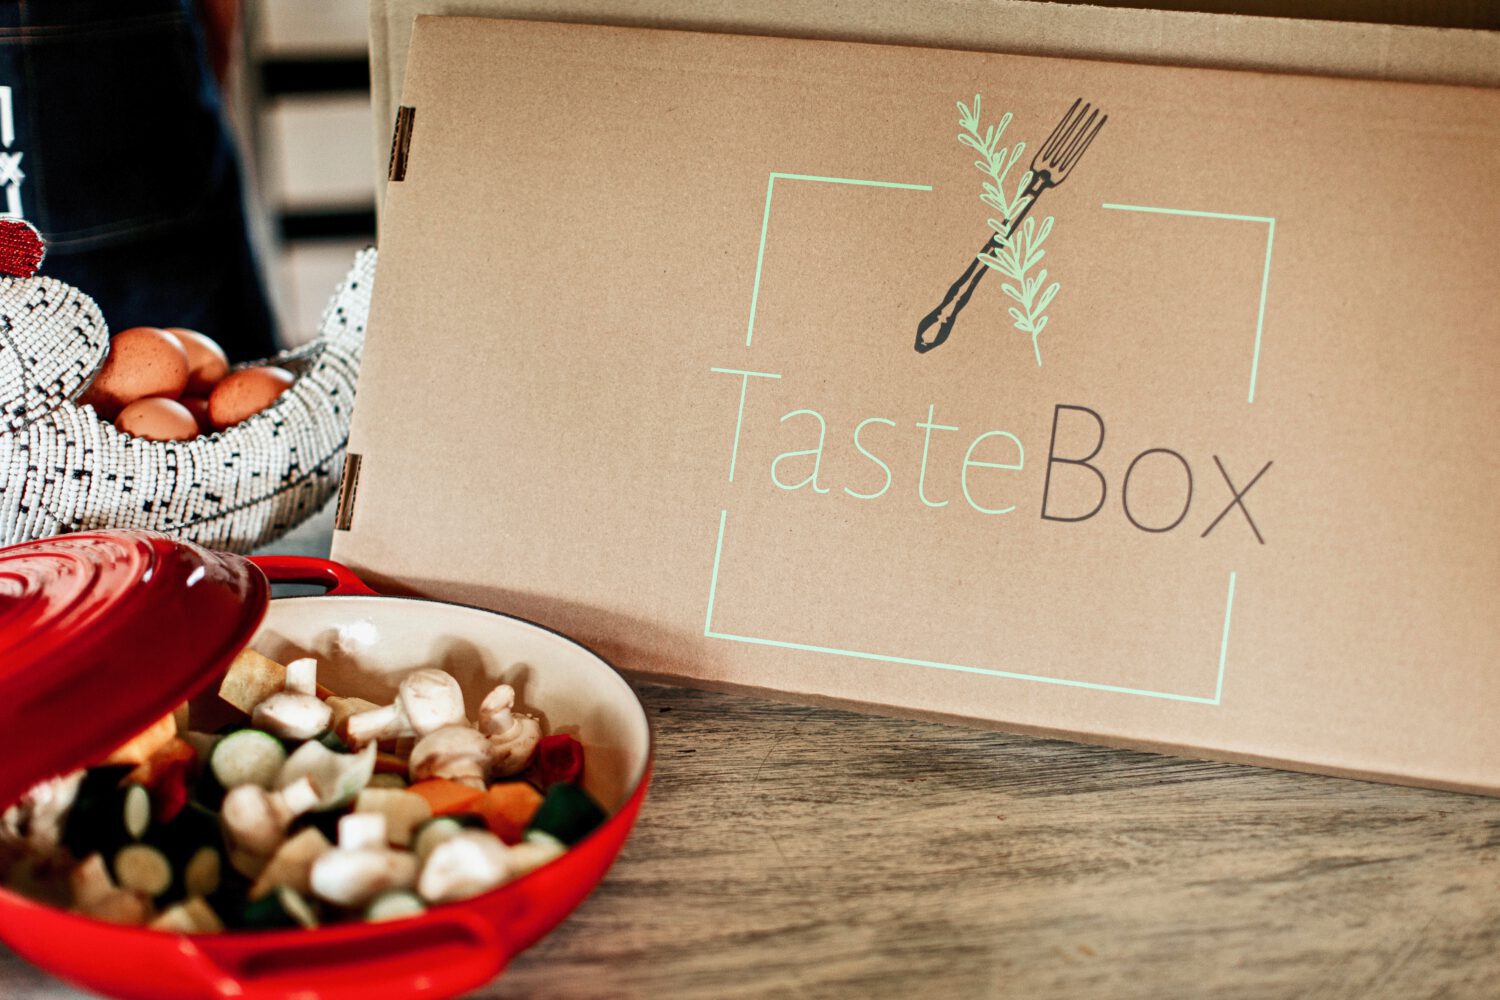 A TasteBox meal kit